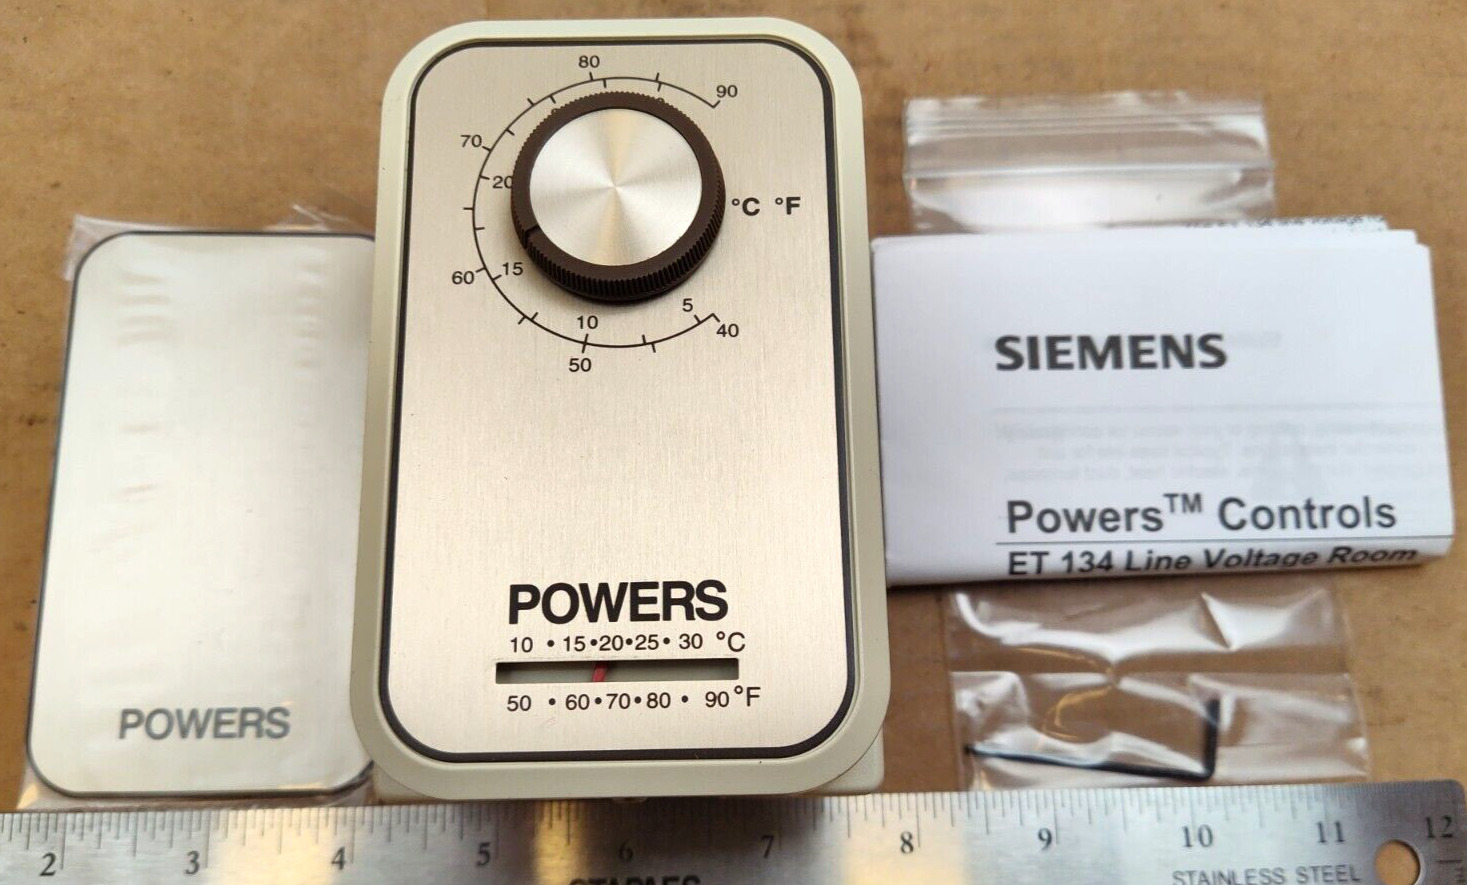 Siemens Room Thermostat LT Duty Line Voltage Range 40/90 F p/n 134-1084